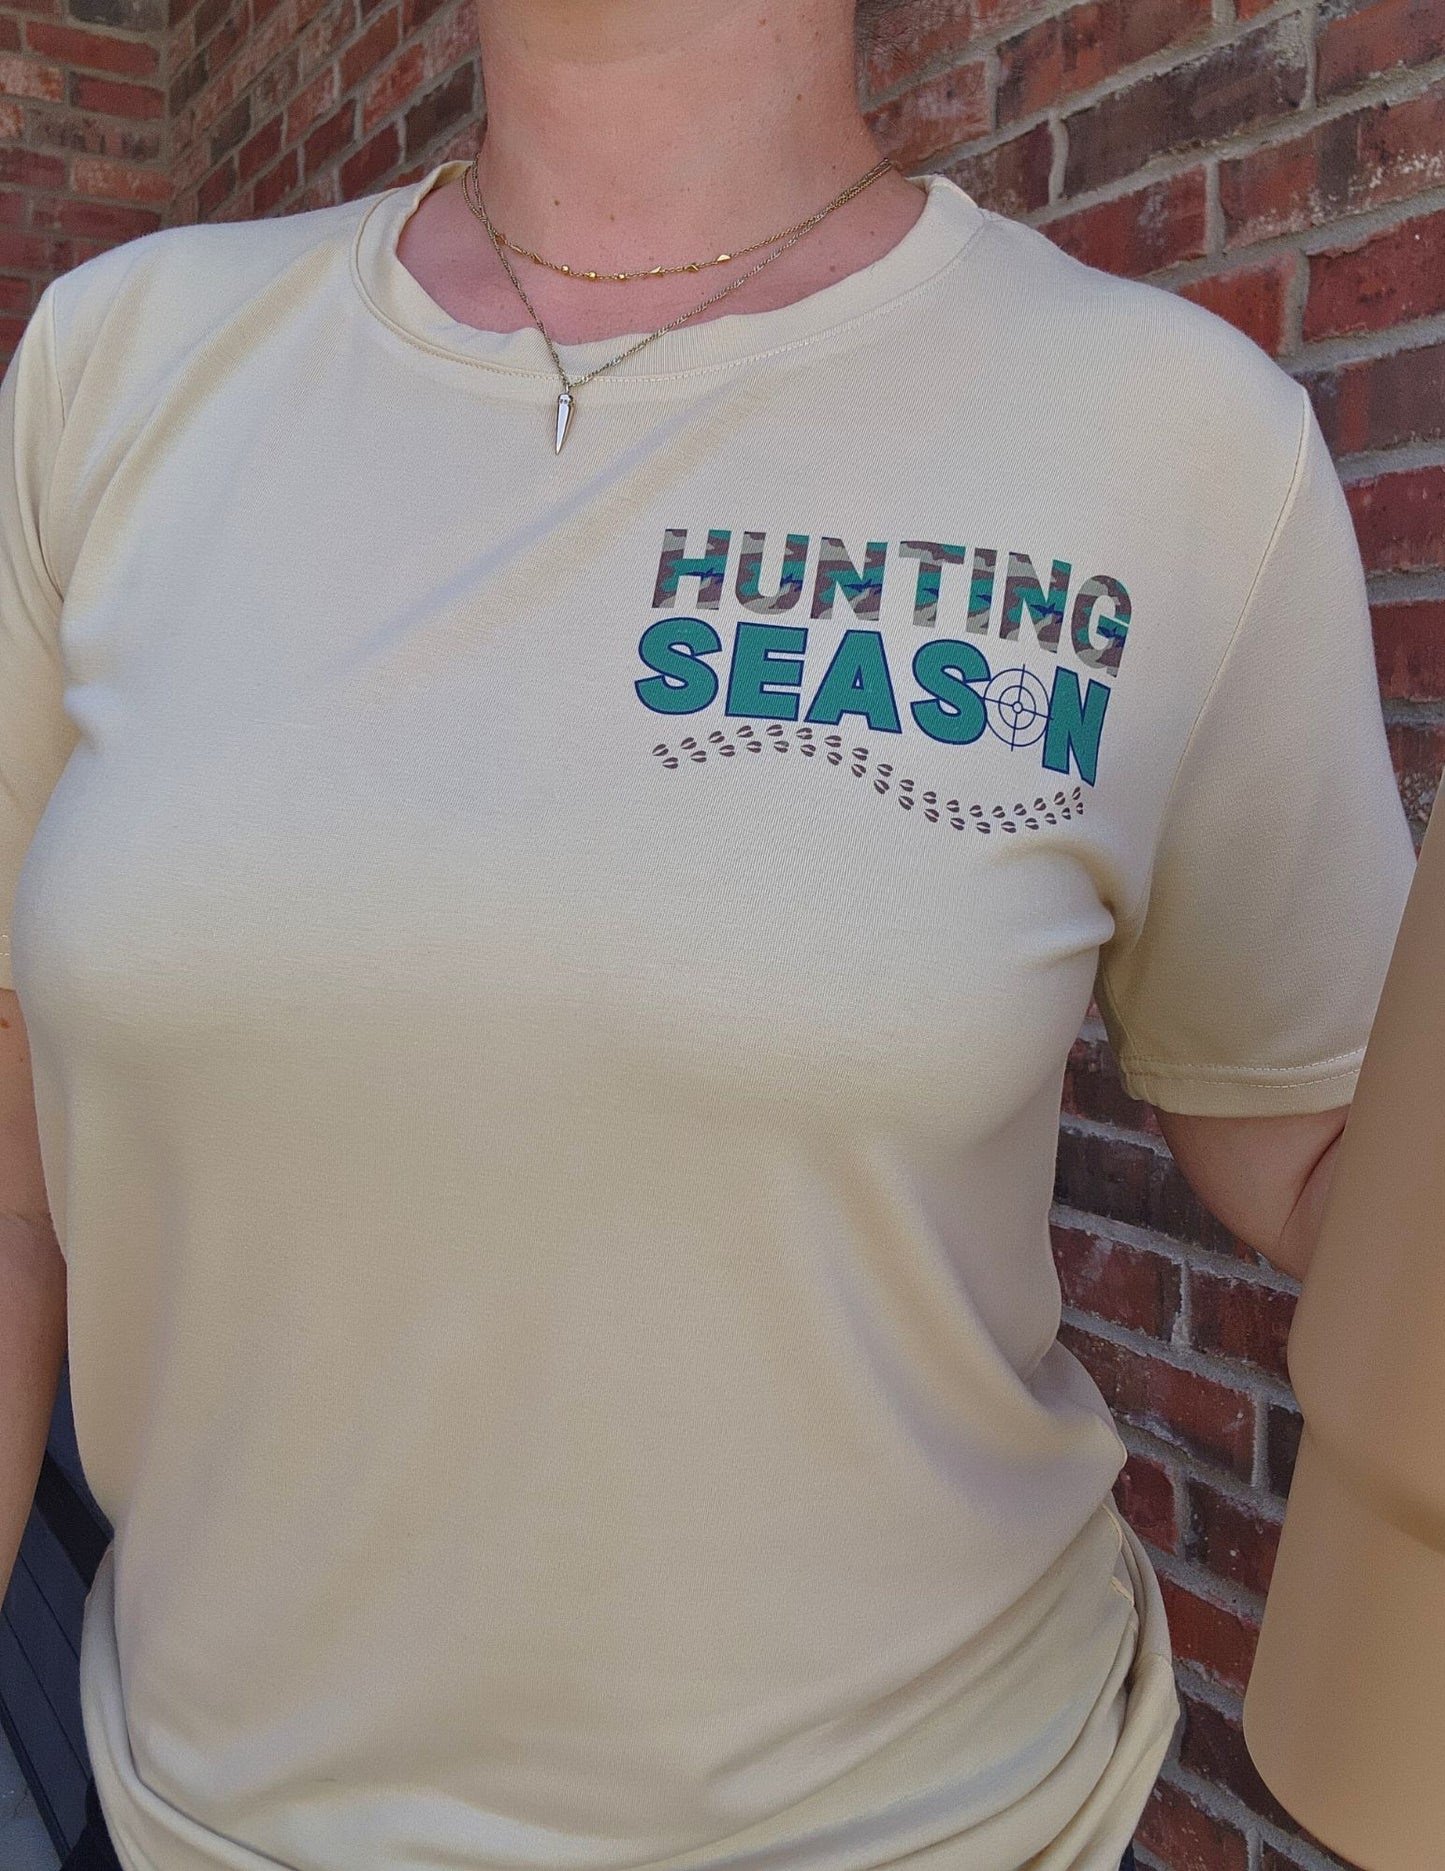 Hello Hunting Season Goodbye Husband - PNG Digital Download